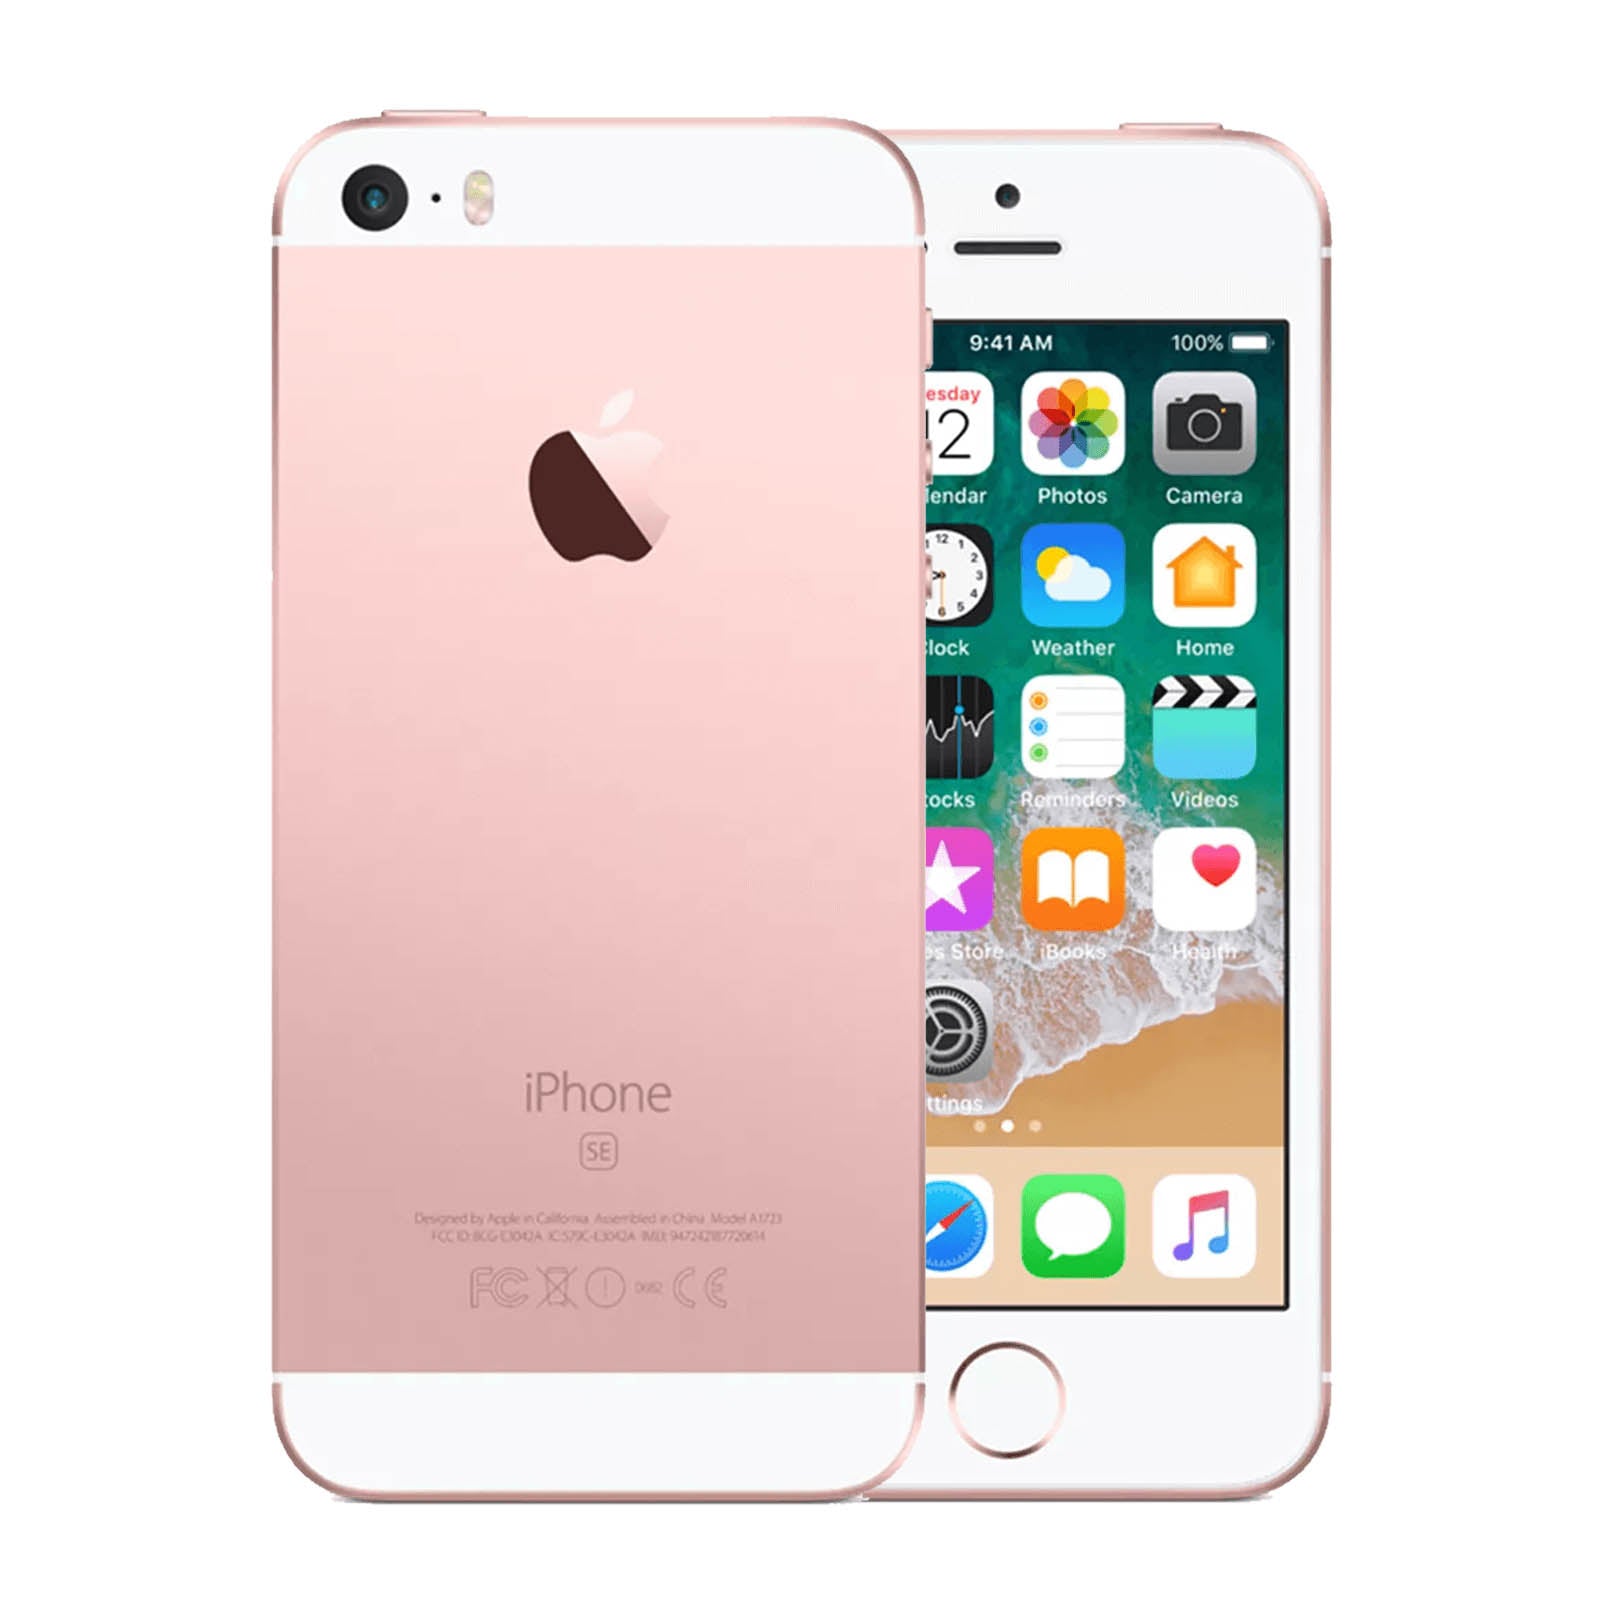 Apple iPhone SE 64GB - Rose Gold – Loop Mobile - AU